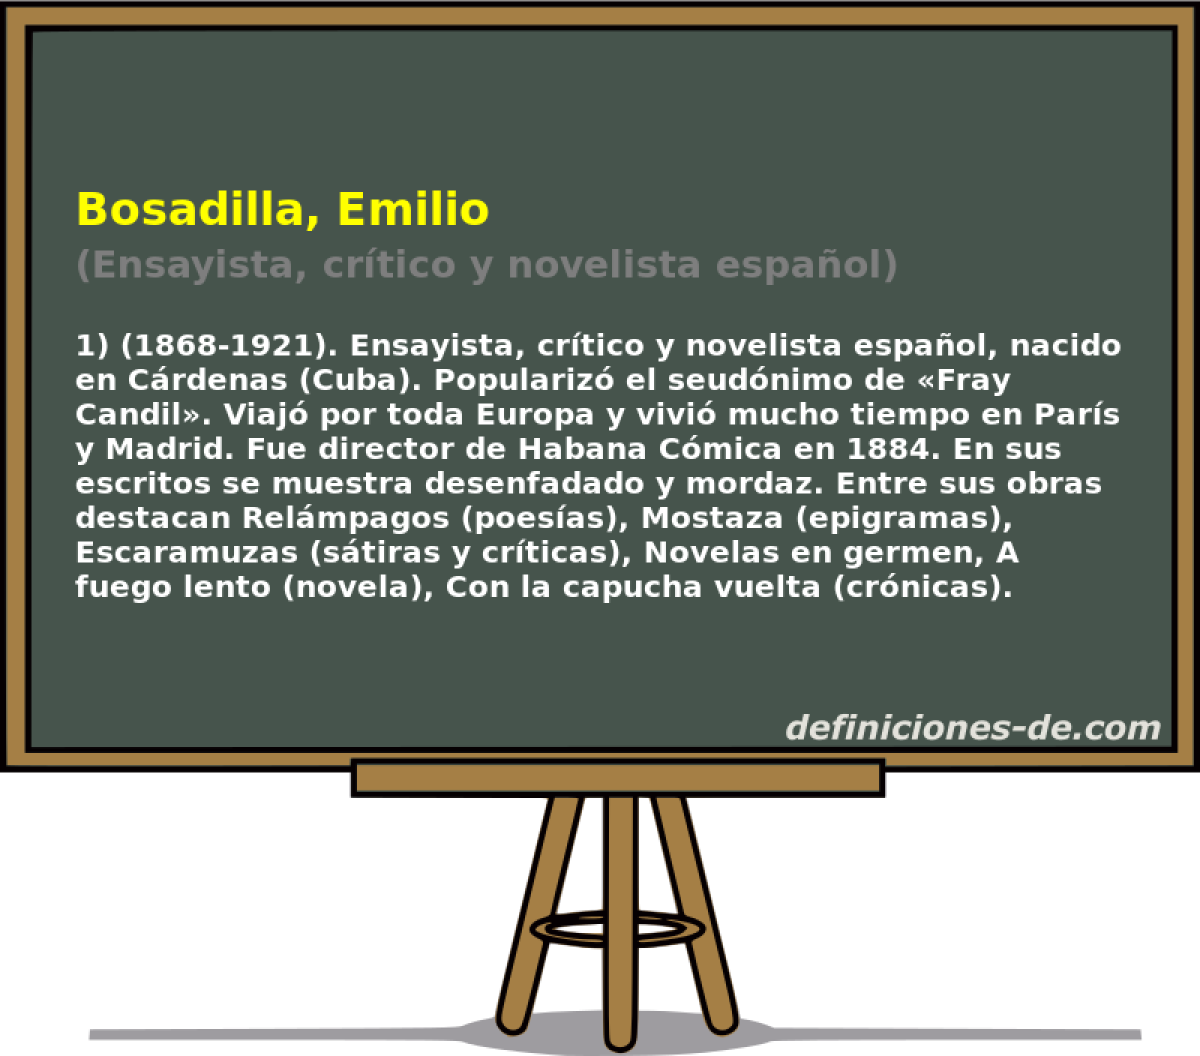 Bosadilla, Emilio (Ensayista, crtico y novelista espaol)